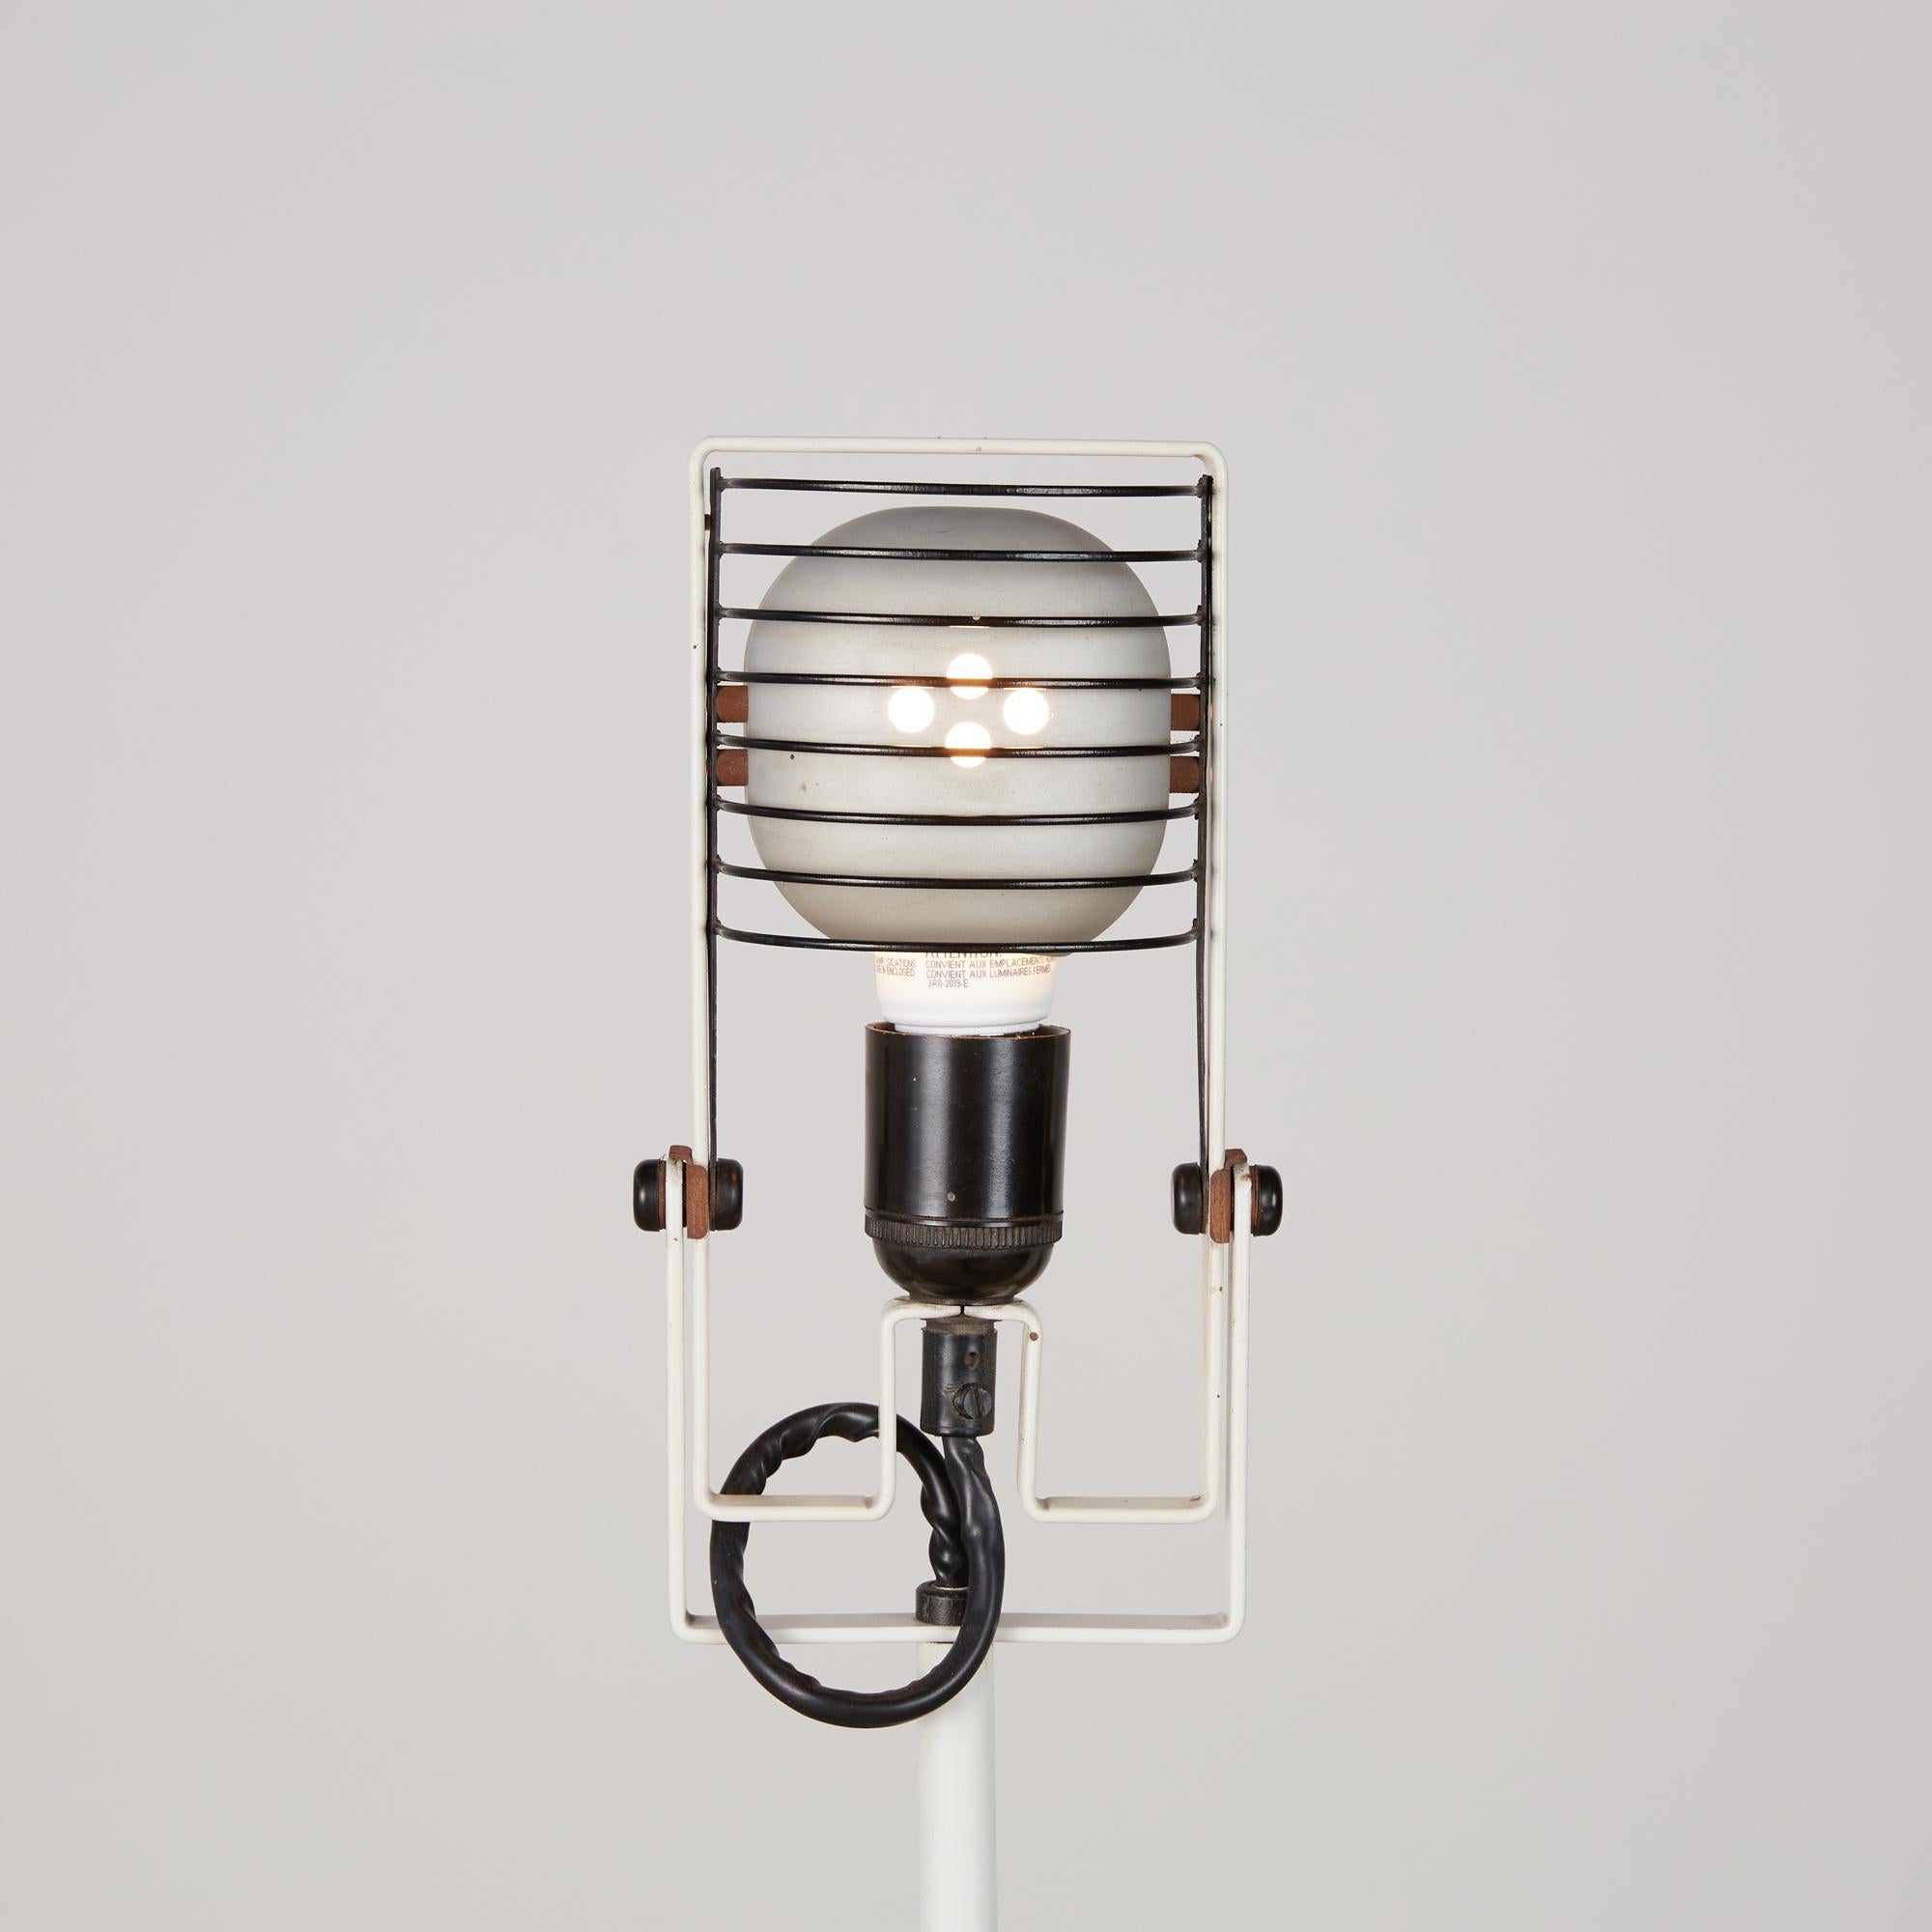 Ernesto Gismondi “Sintesi” Floor Lamp for Artemide 1